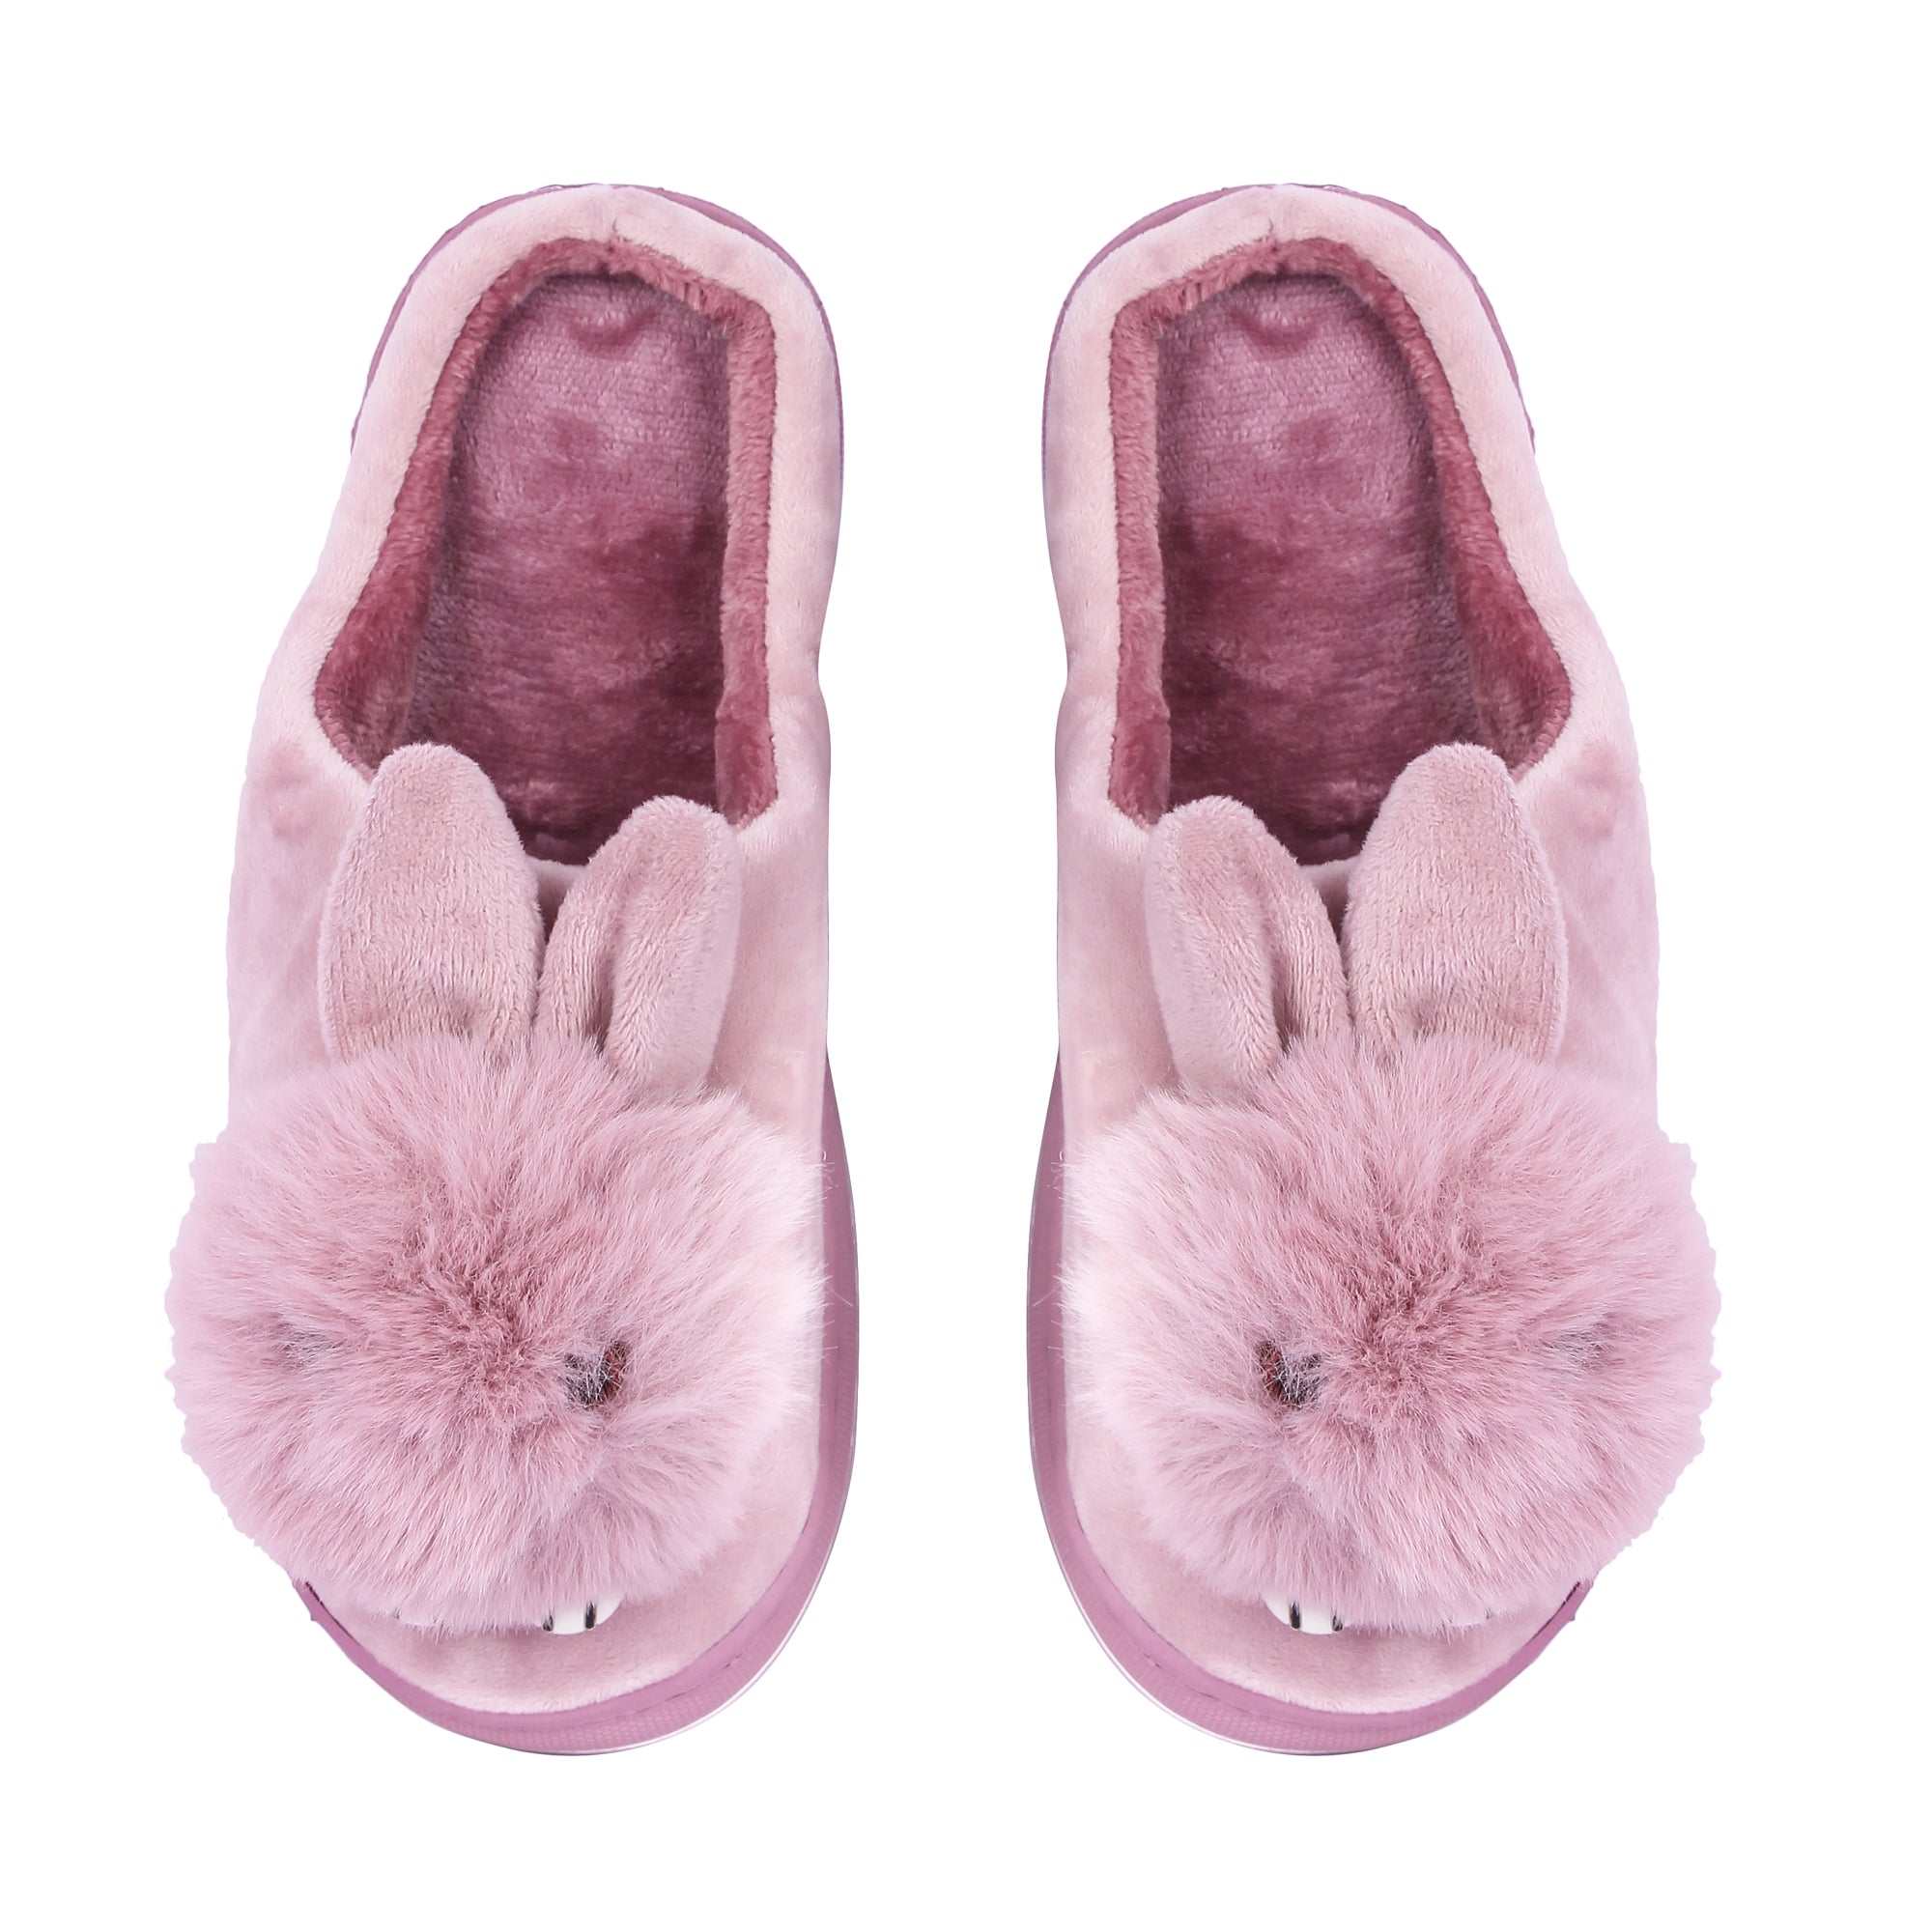 Asda George Ladies Silver Sandals - Size UK 4 | eBay